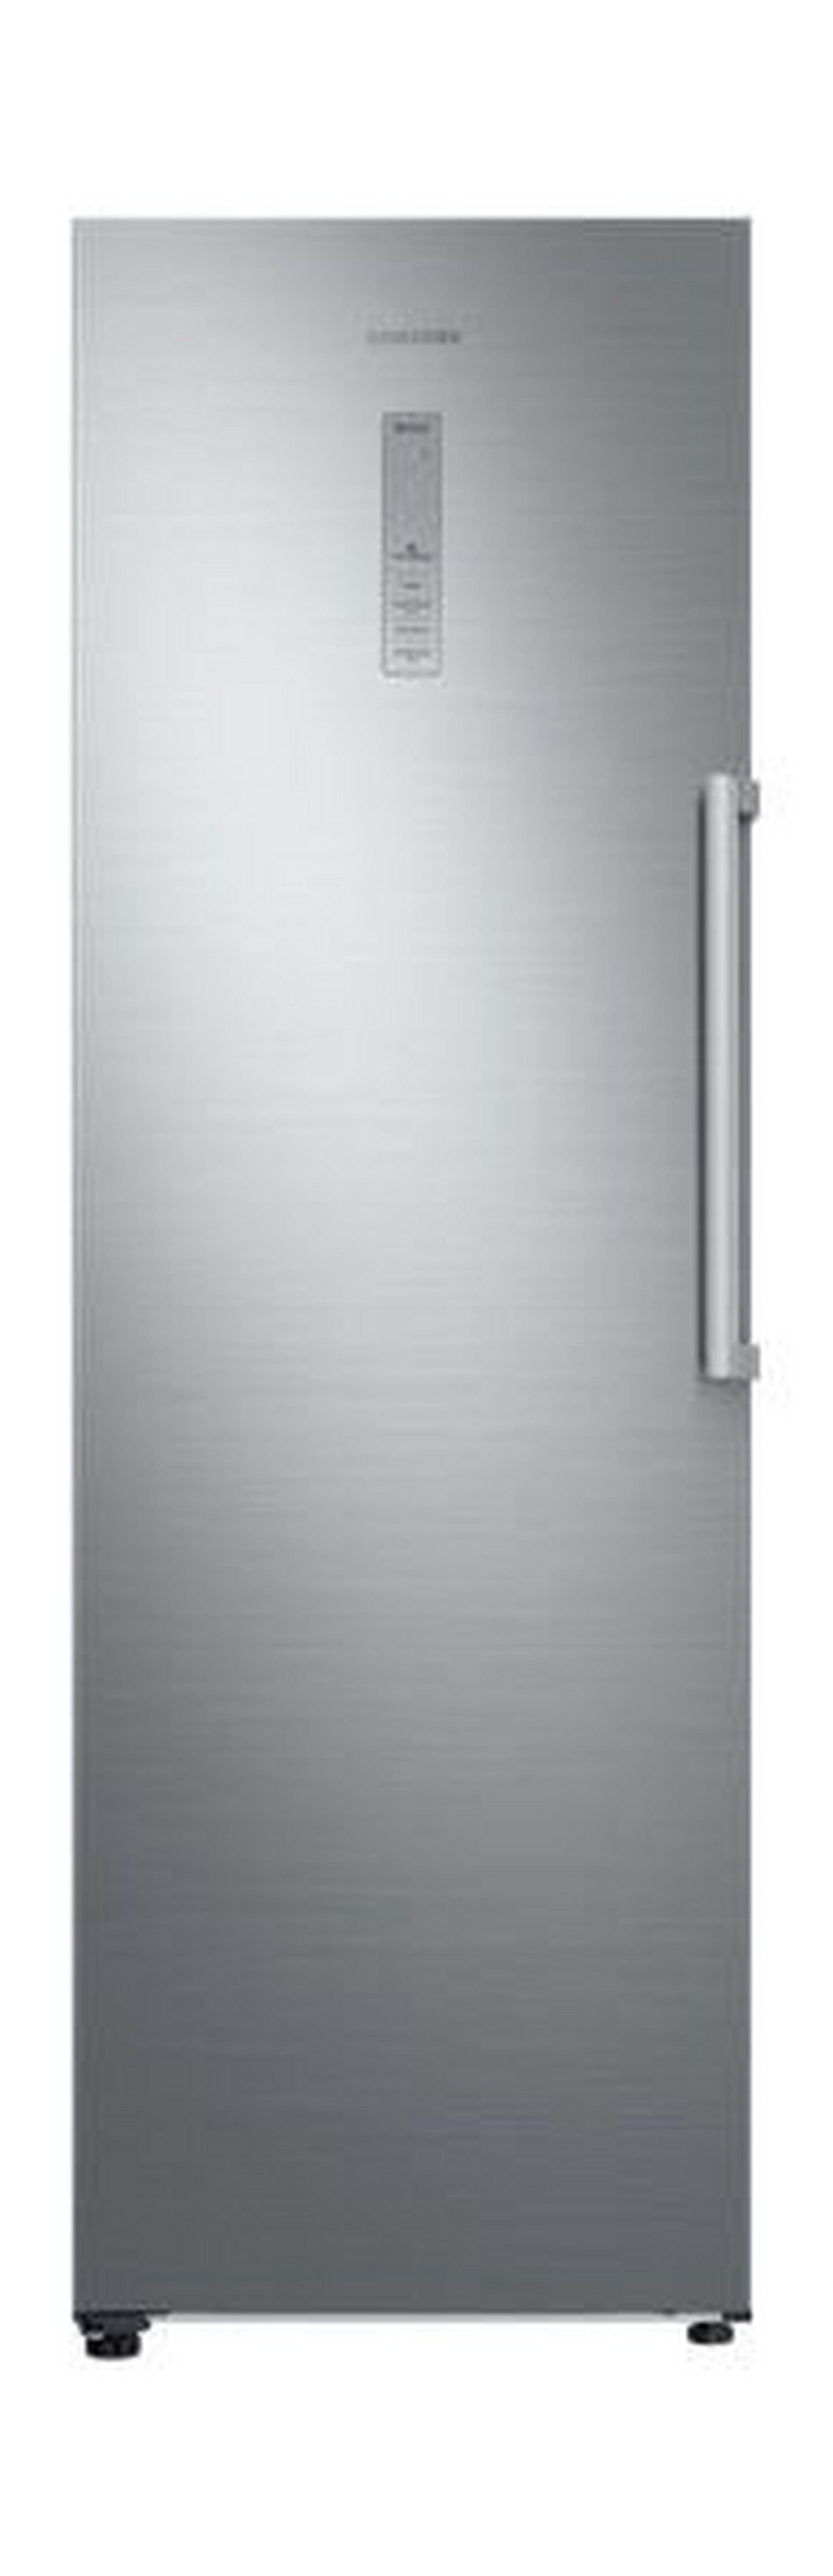 Samsung 12 Cft. Upright Freezer - (RZ32M71207F) - Stainless Steel